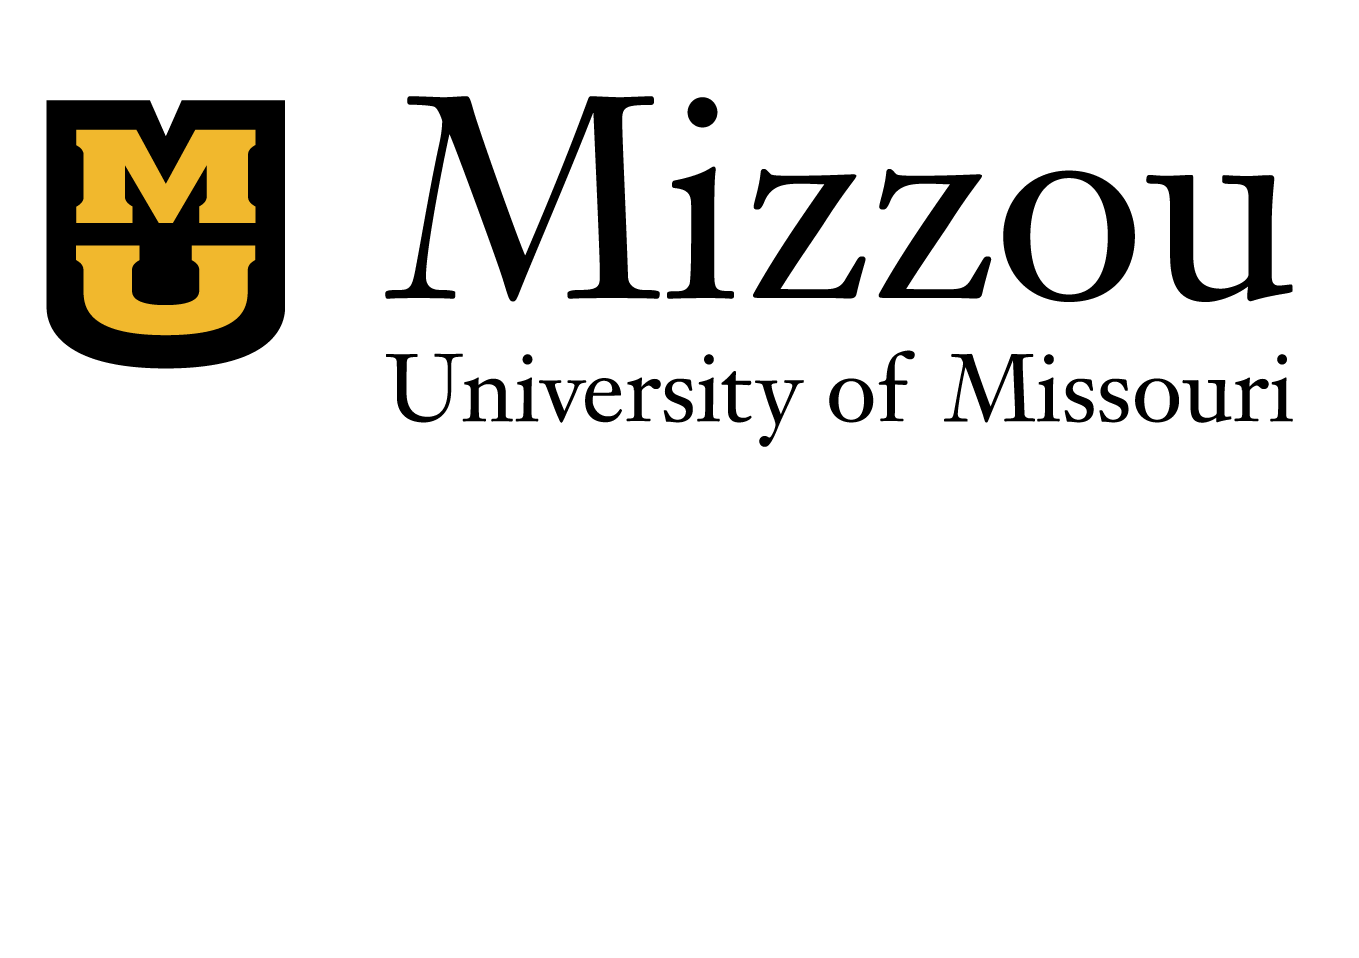 University of Missouri: